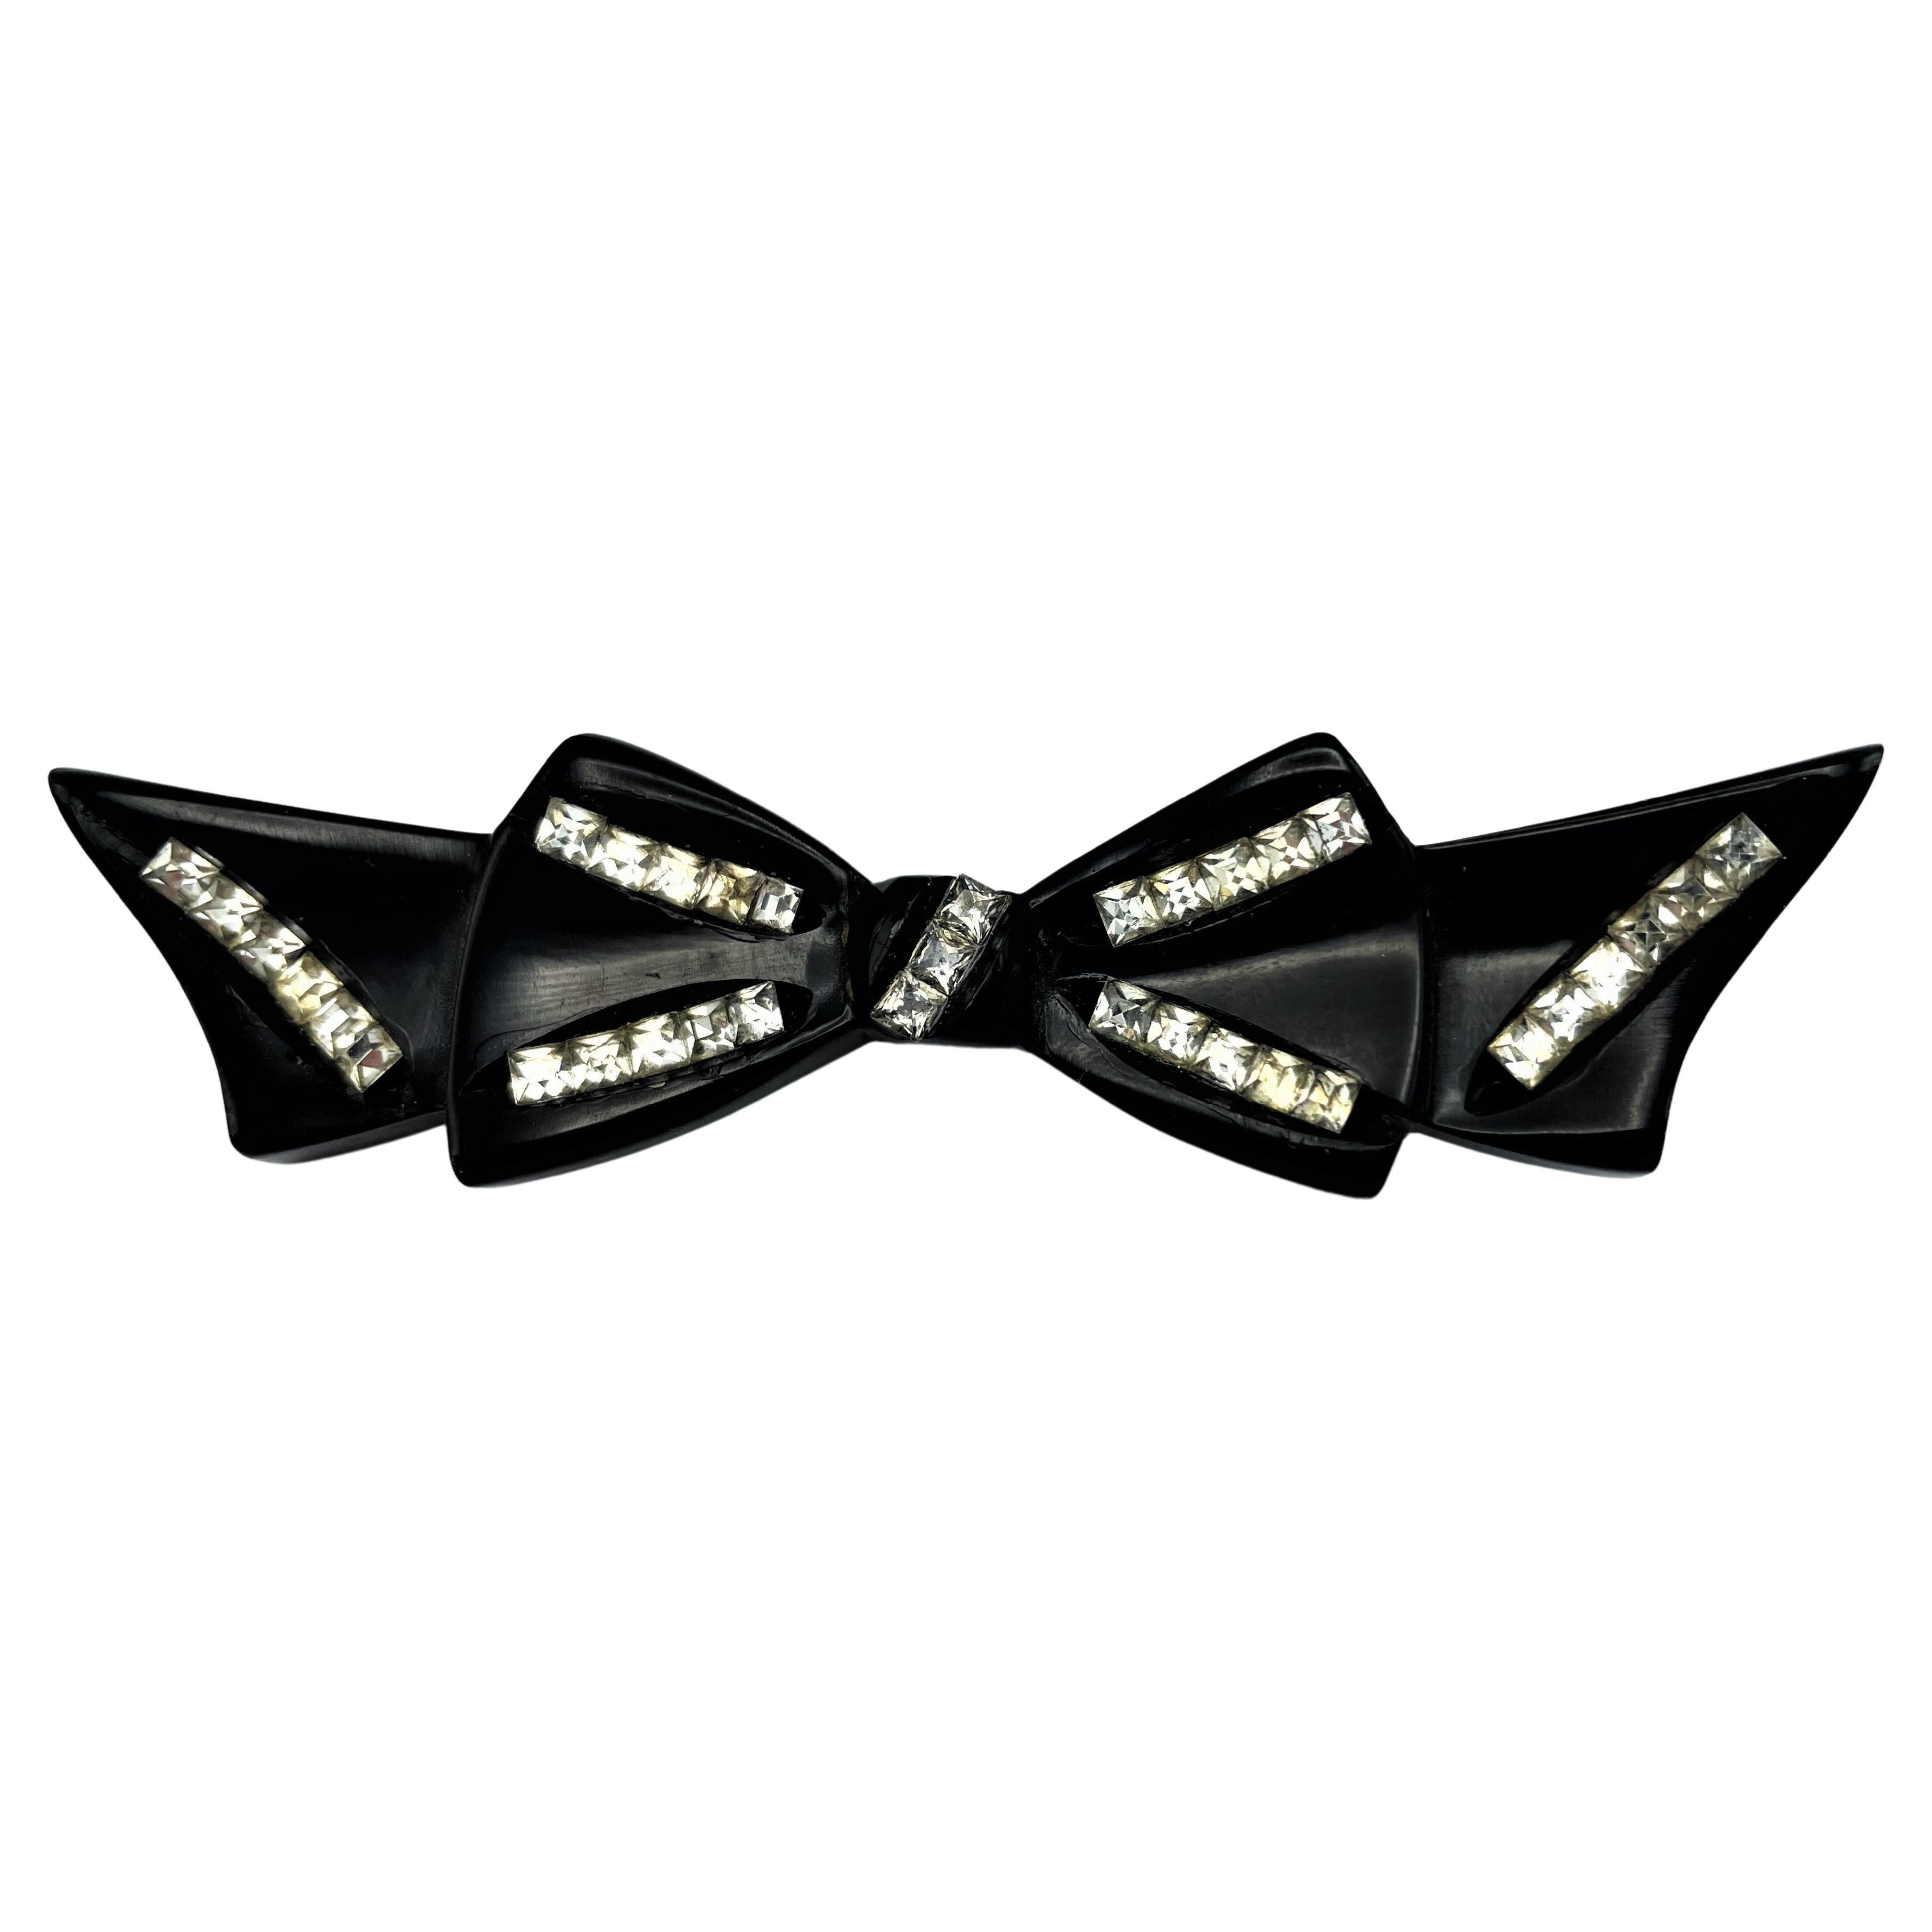 Black Bakelite bow brooch with  many rhinestones, 1950s USA